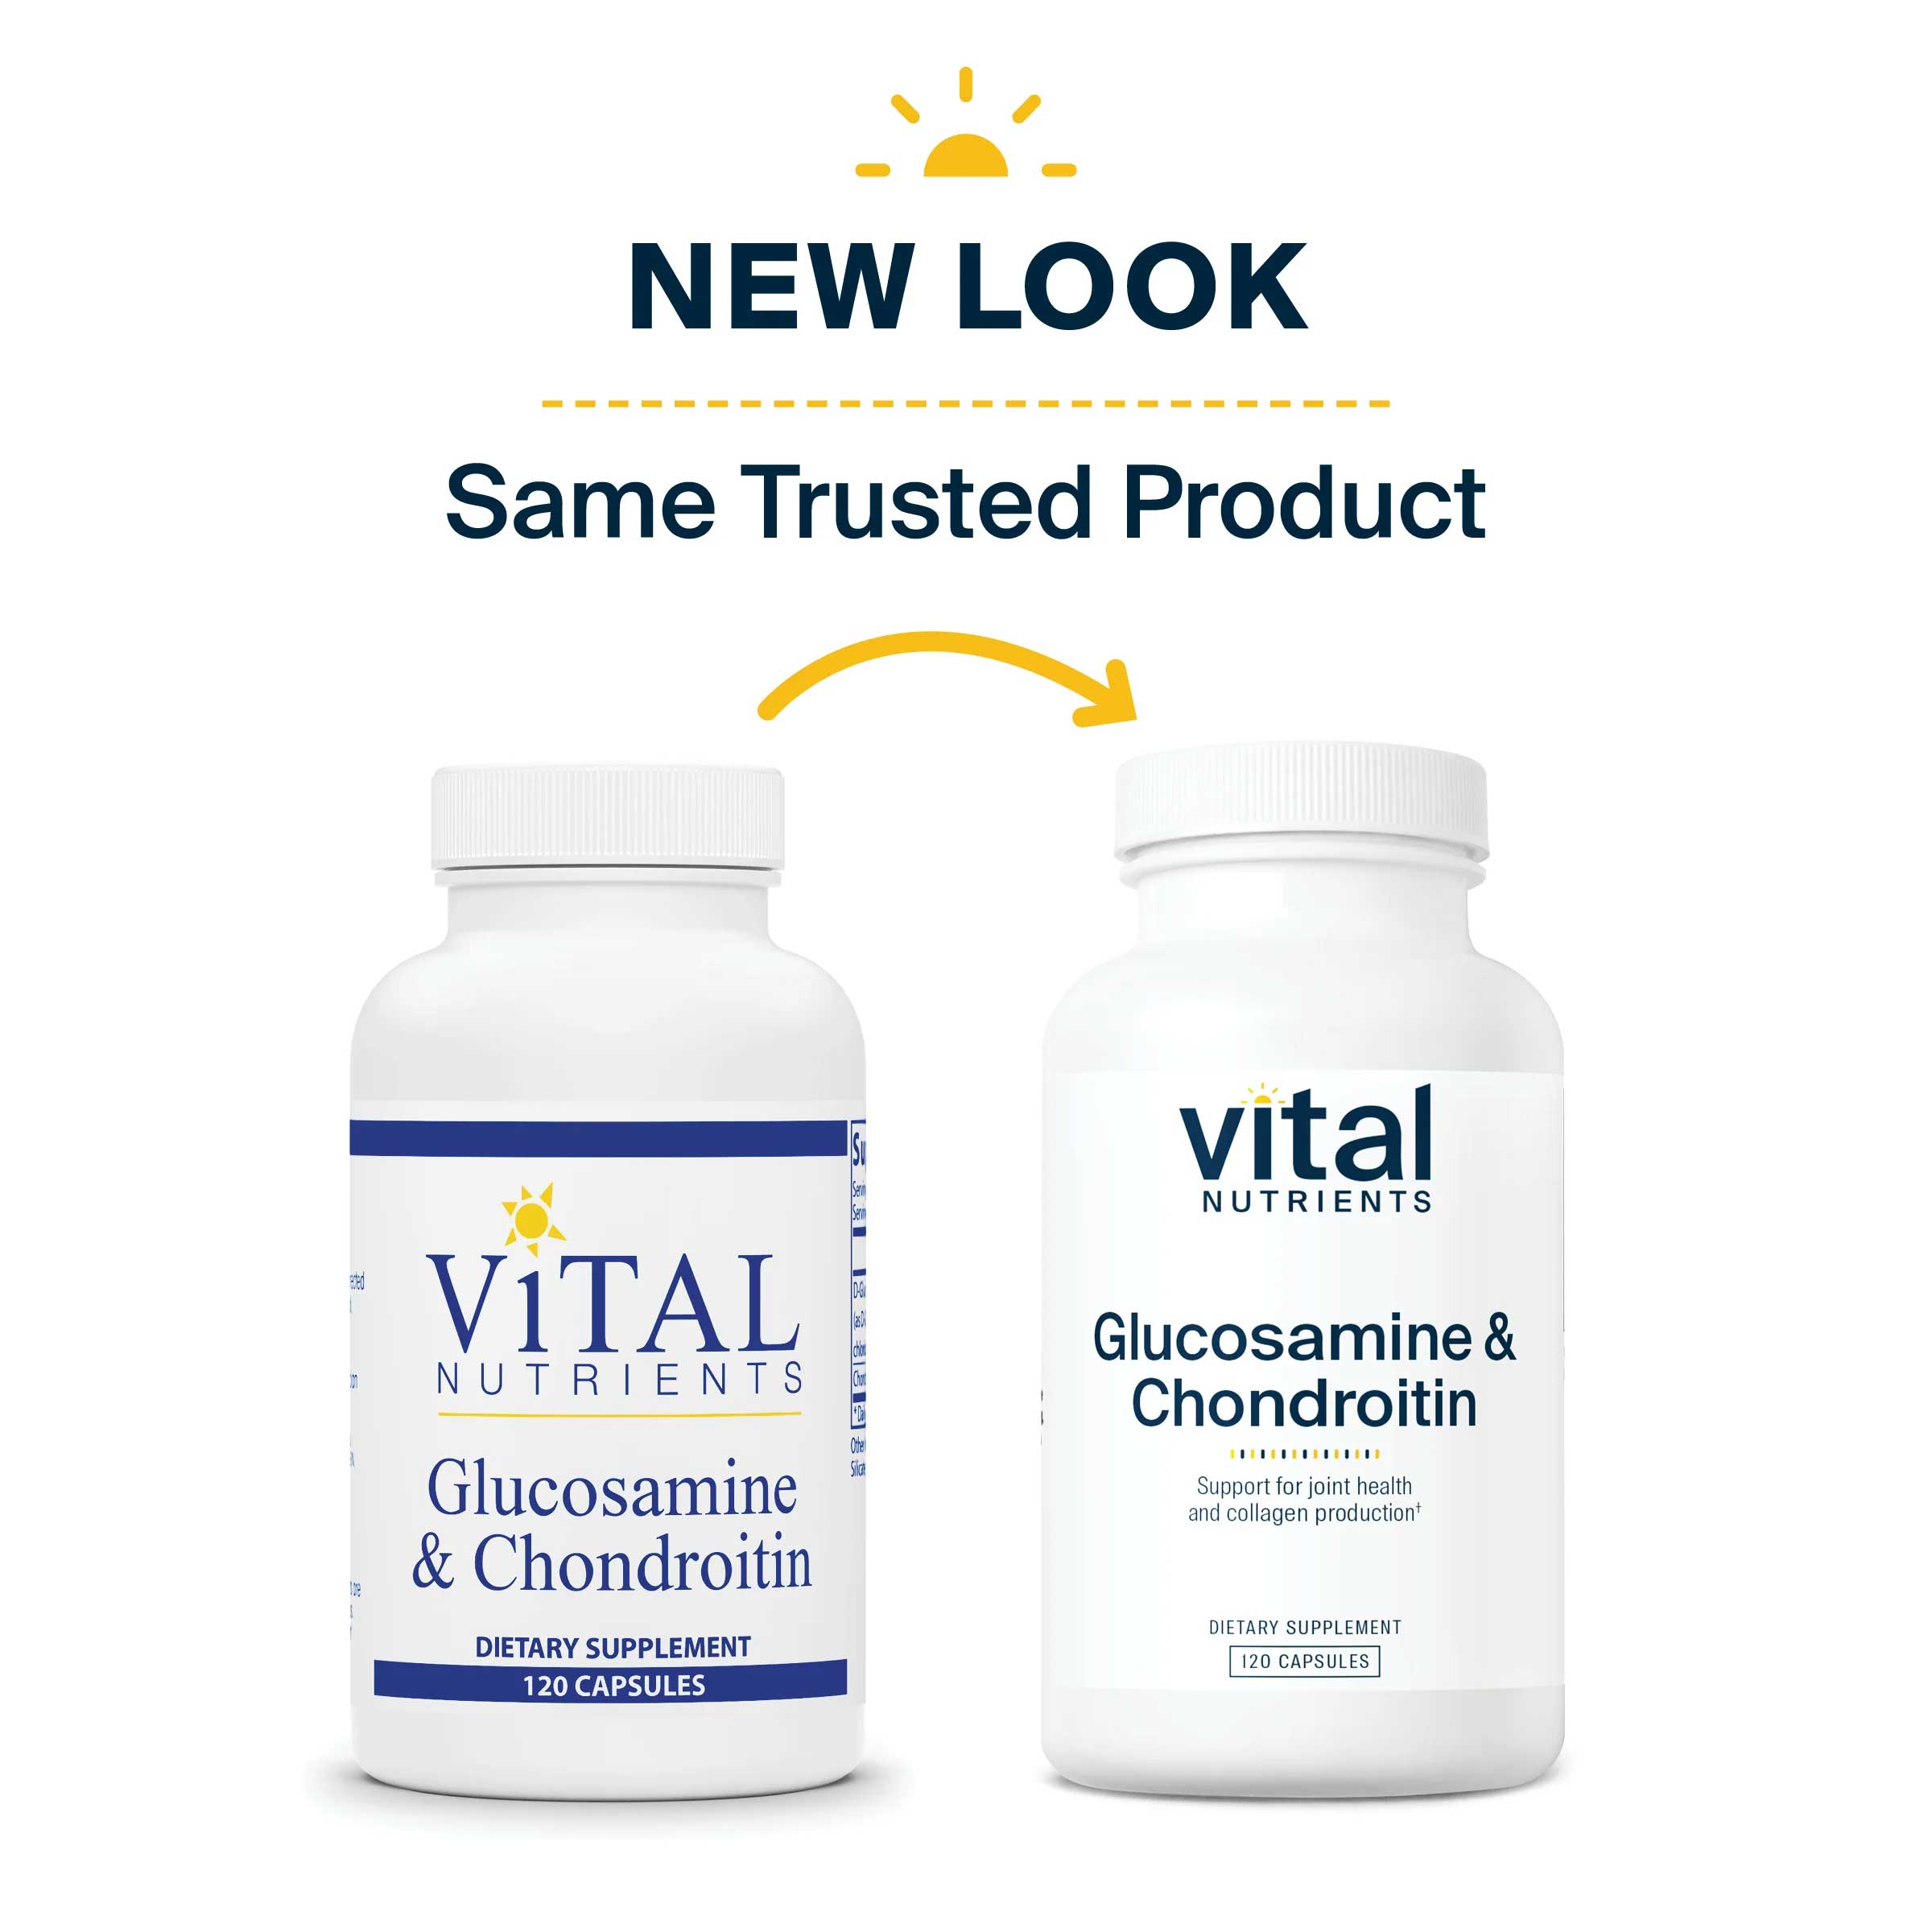 Vital Nutrients Glucosamine & Chondroitin New Look